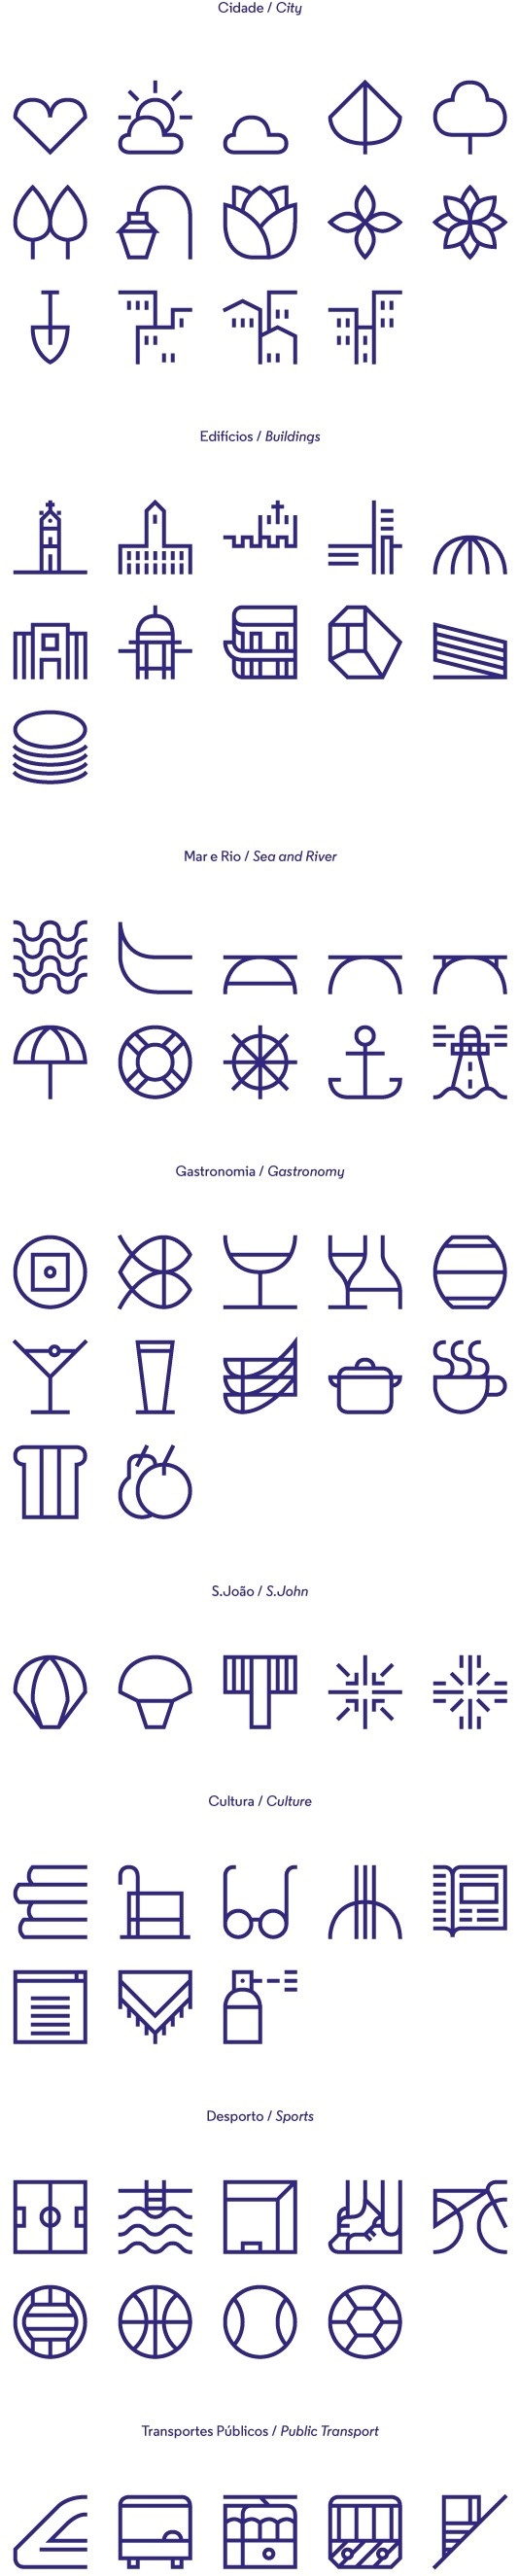 New identity for the city of Porto on Behance #icons #symbols #iconography